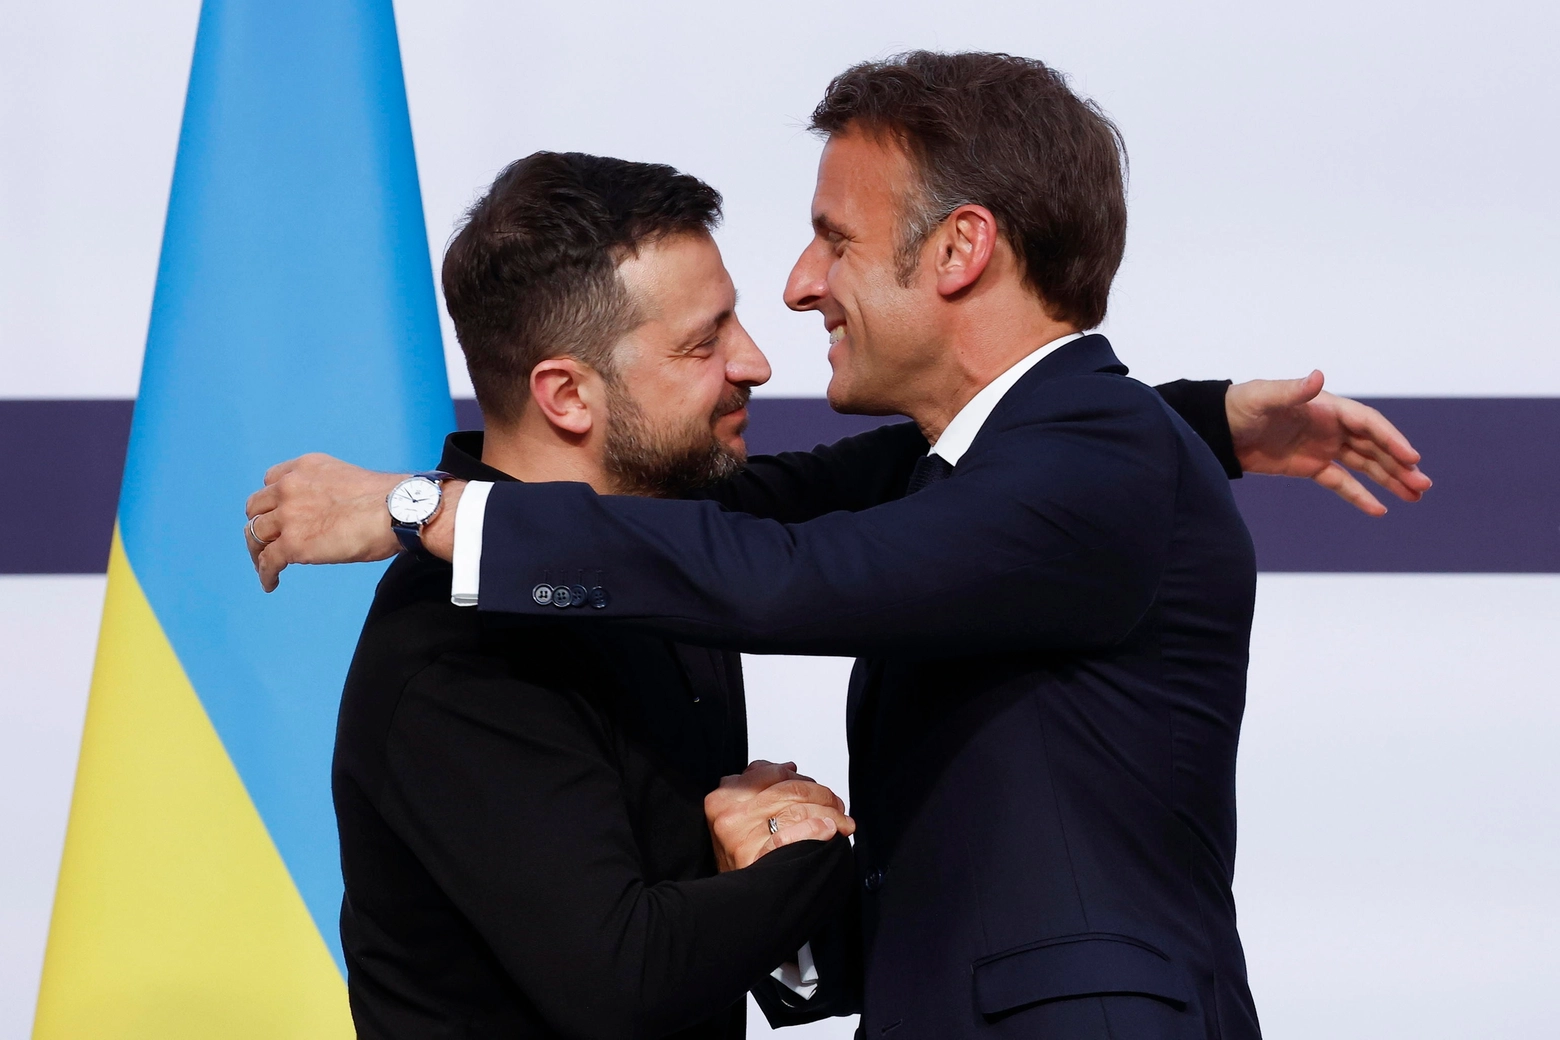 L'abbraccio tra il presidente francese Emmanuel Macron e il leader ucraino Volodymyr Zelensky